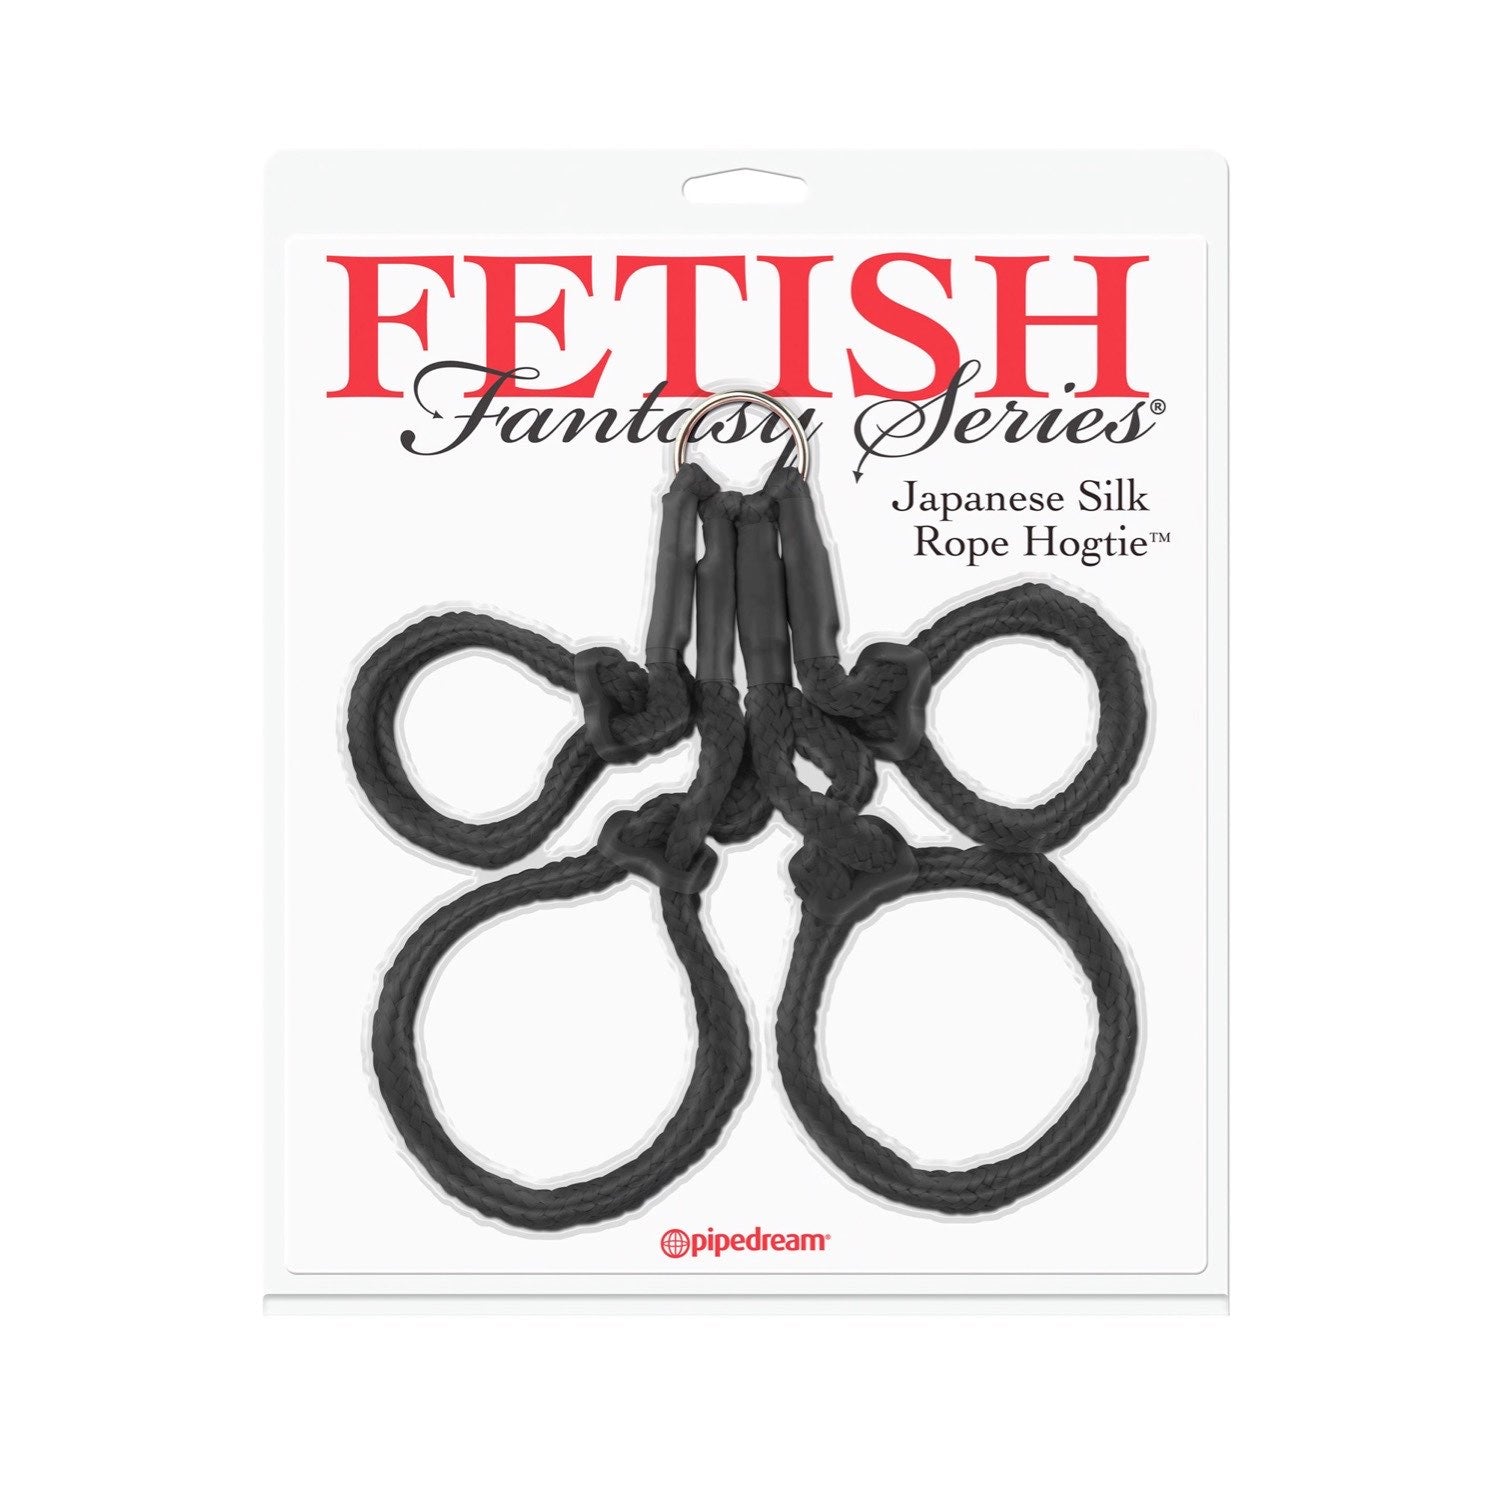 Fetish Fantasy Series Japanese Silk Rope Hogtie - Black Restraints by Pipedream